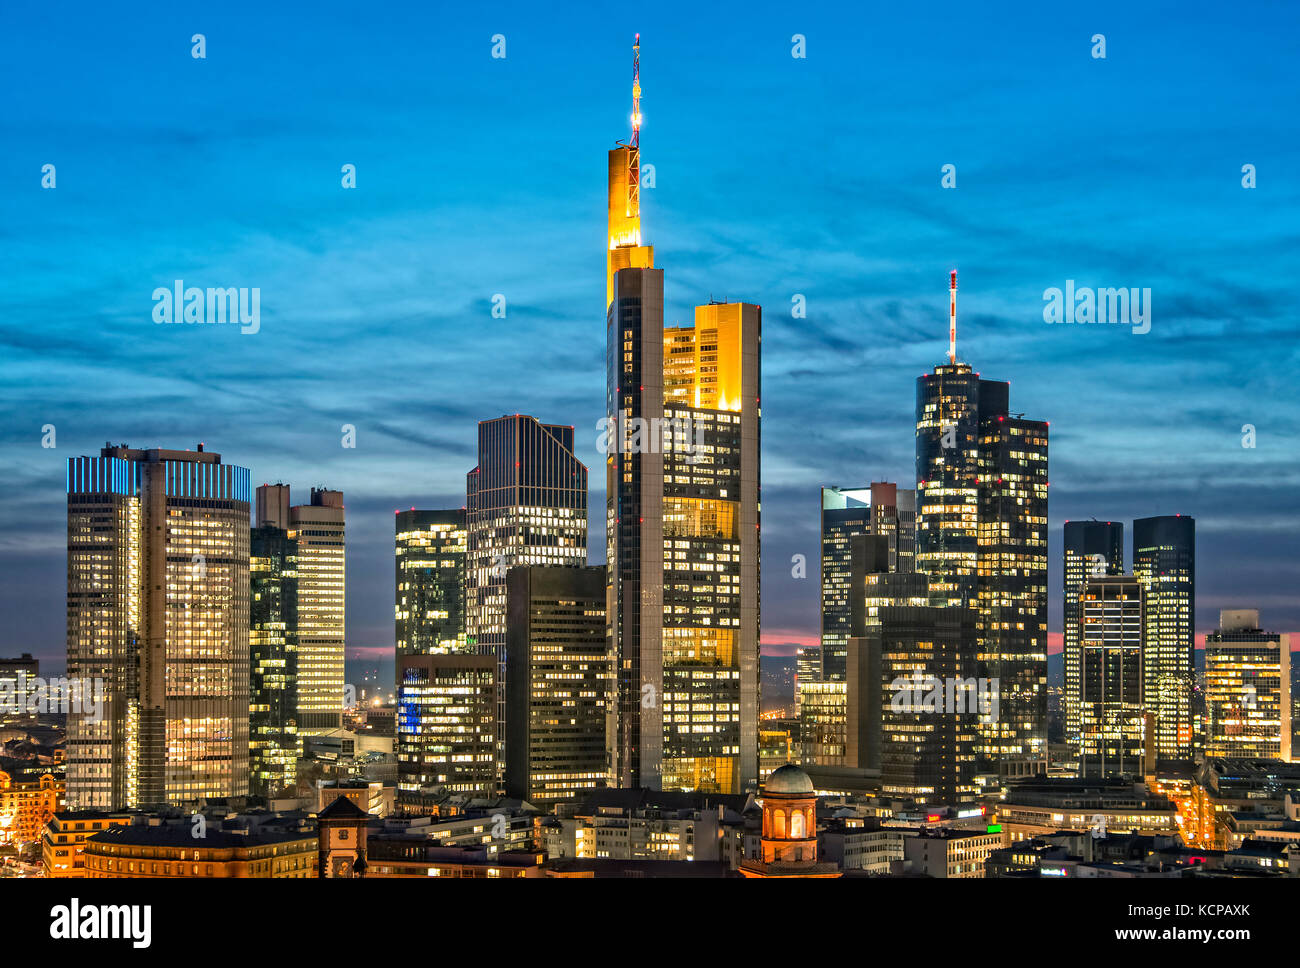 Skyline of Frankfurt with illuminated skyscrapers Stock Photo